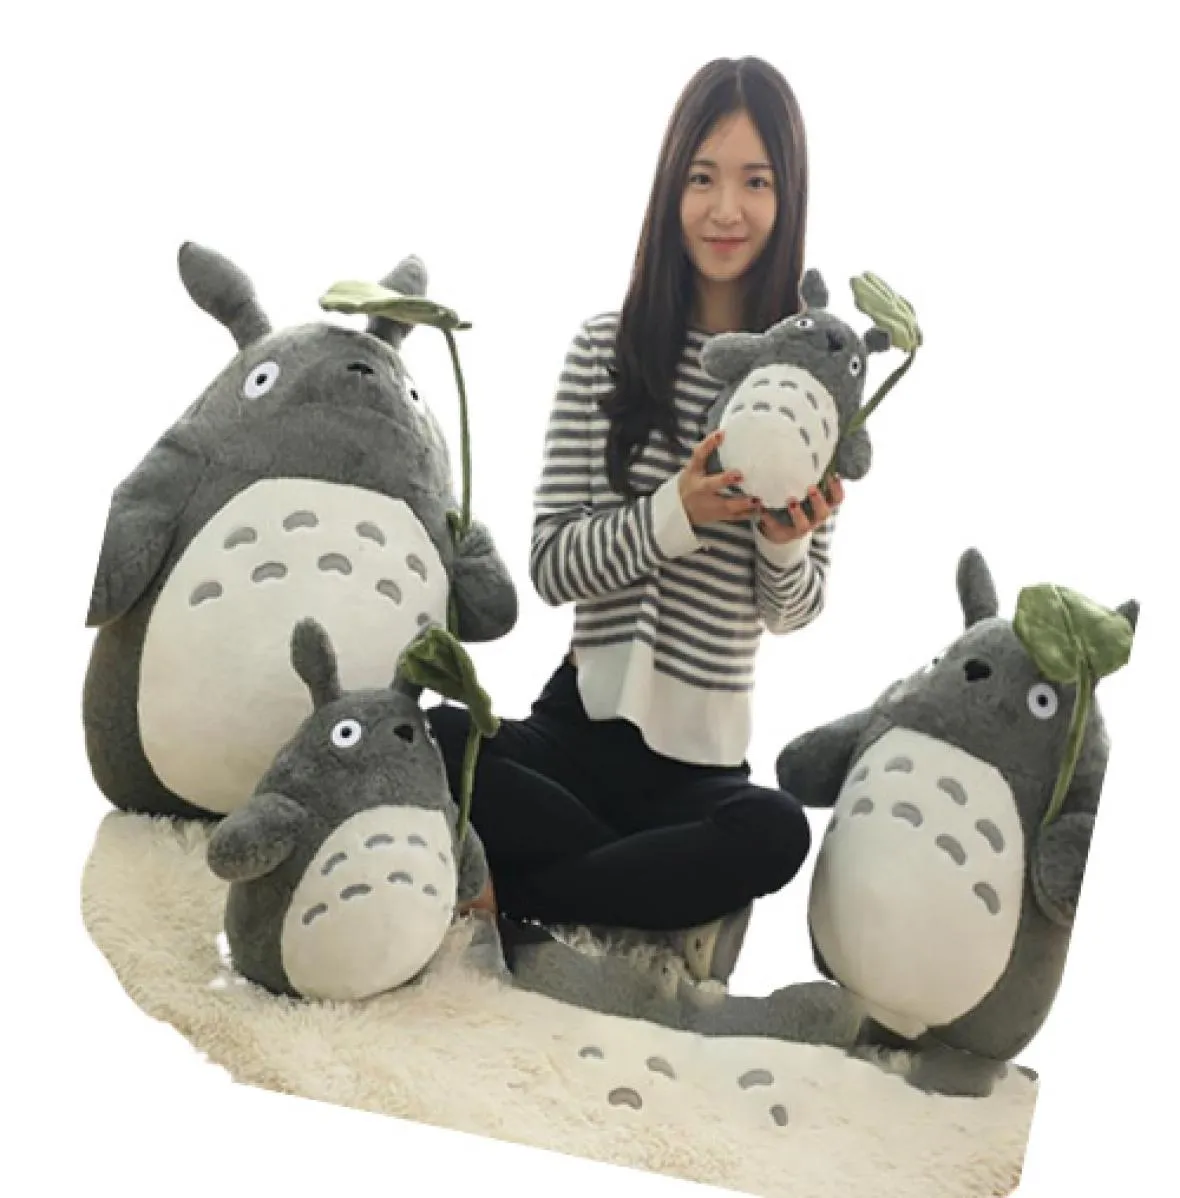 30cm INS Soft Totoro Doll Standing Kawaii Japan Cartoon Figure Grey Cat Plush Toy With Green Leaf Umbrella Kids Present6820328